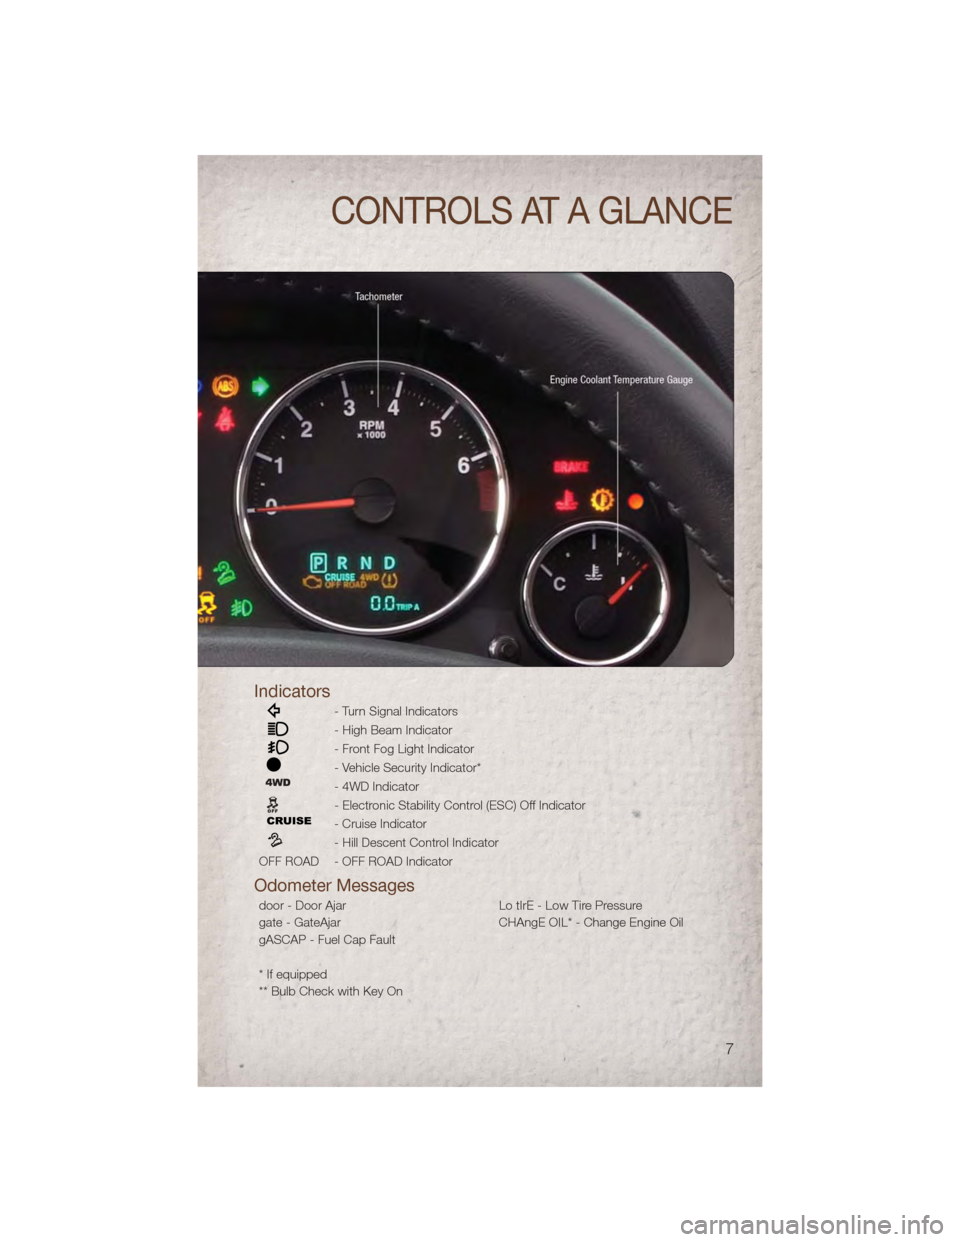 JEEP PATRIOT 2011 1.G User Guide Indicators
- Turn Signal Indicators
- High Beam Indicator
- Front Fog Light Indicator
- Vehicle Security Indicator*
- 4WD Indicator
- Electronic Stability Control (ESC) Off Indicator
- Cruise Indicato